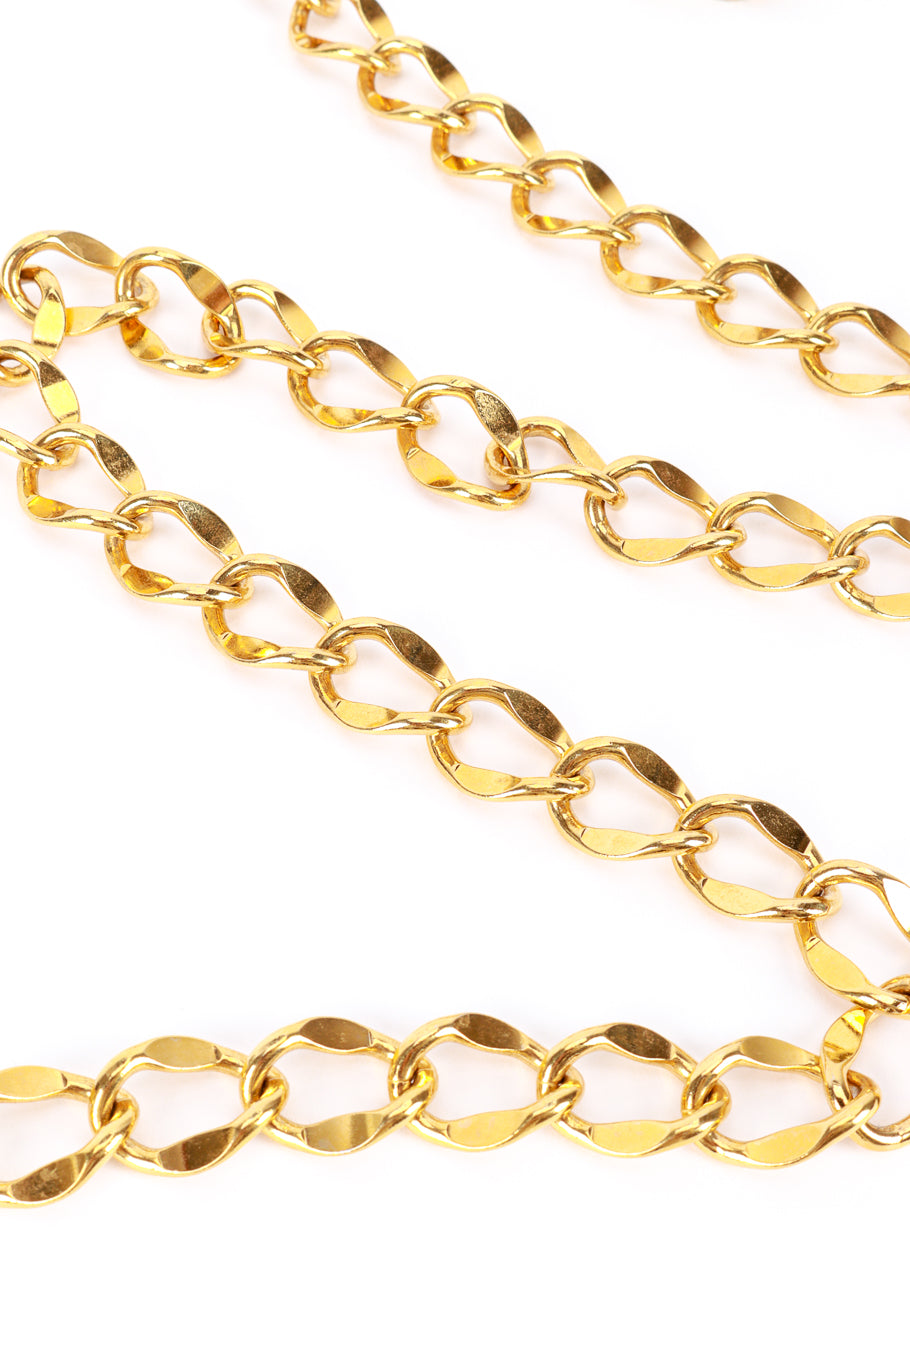 Vintage Chanel Curb Chain Drape Belt looped into S shape closeup of links @recess la